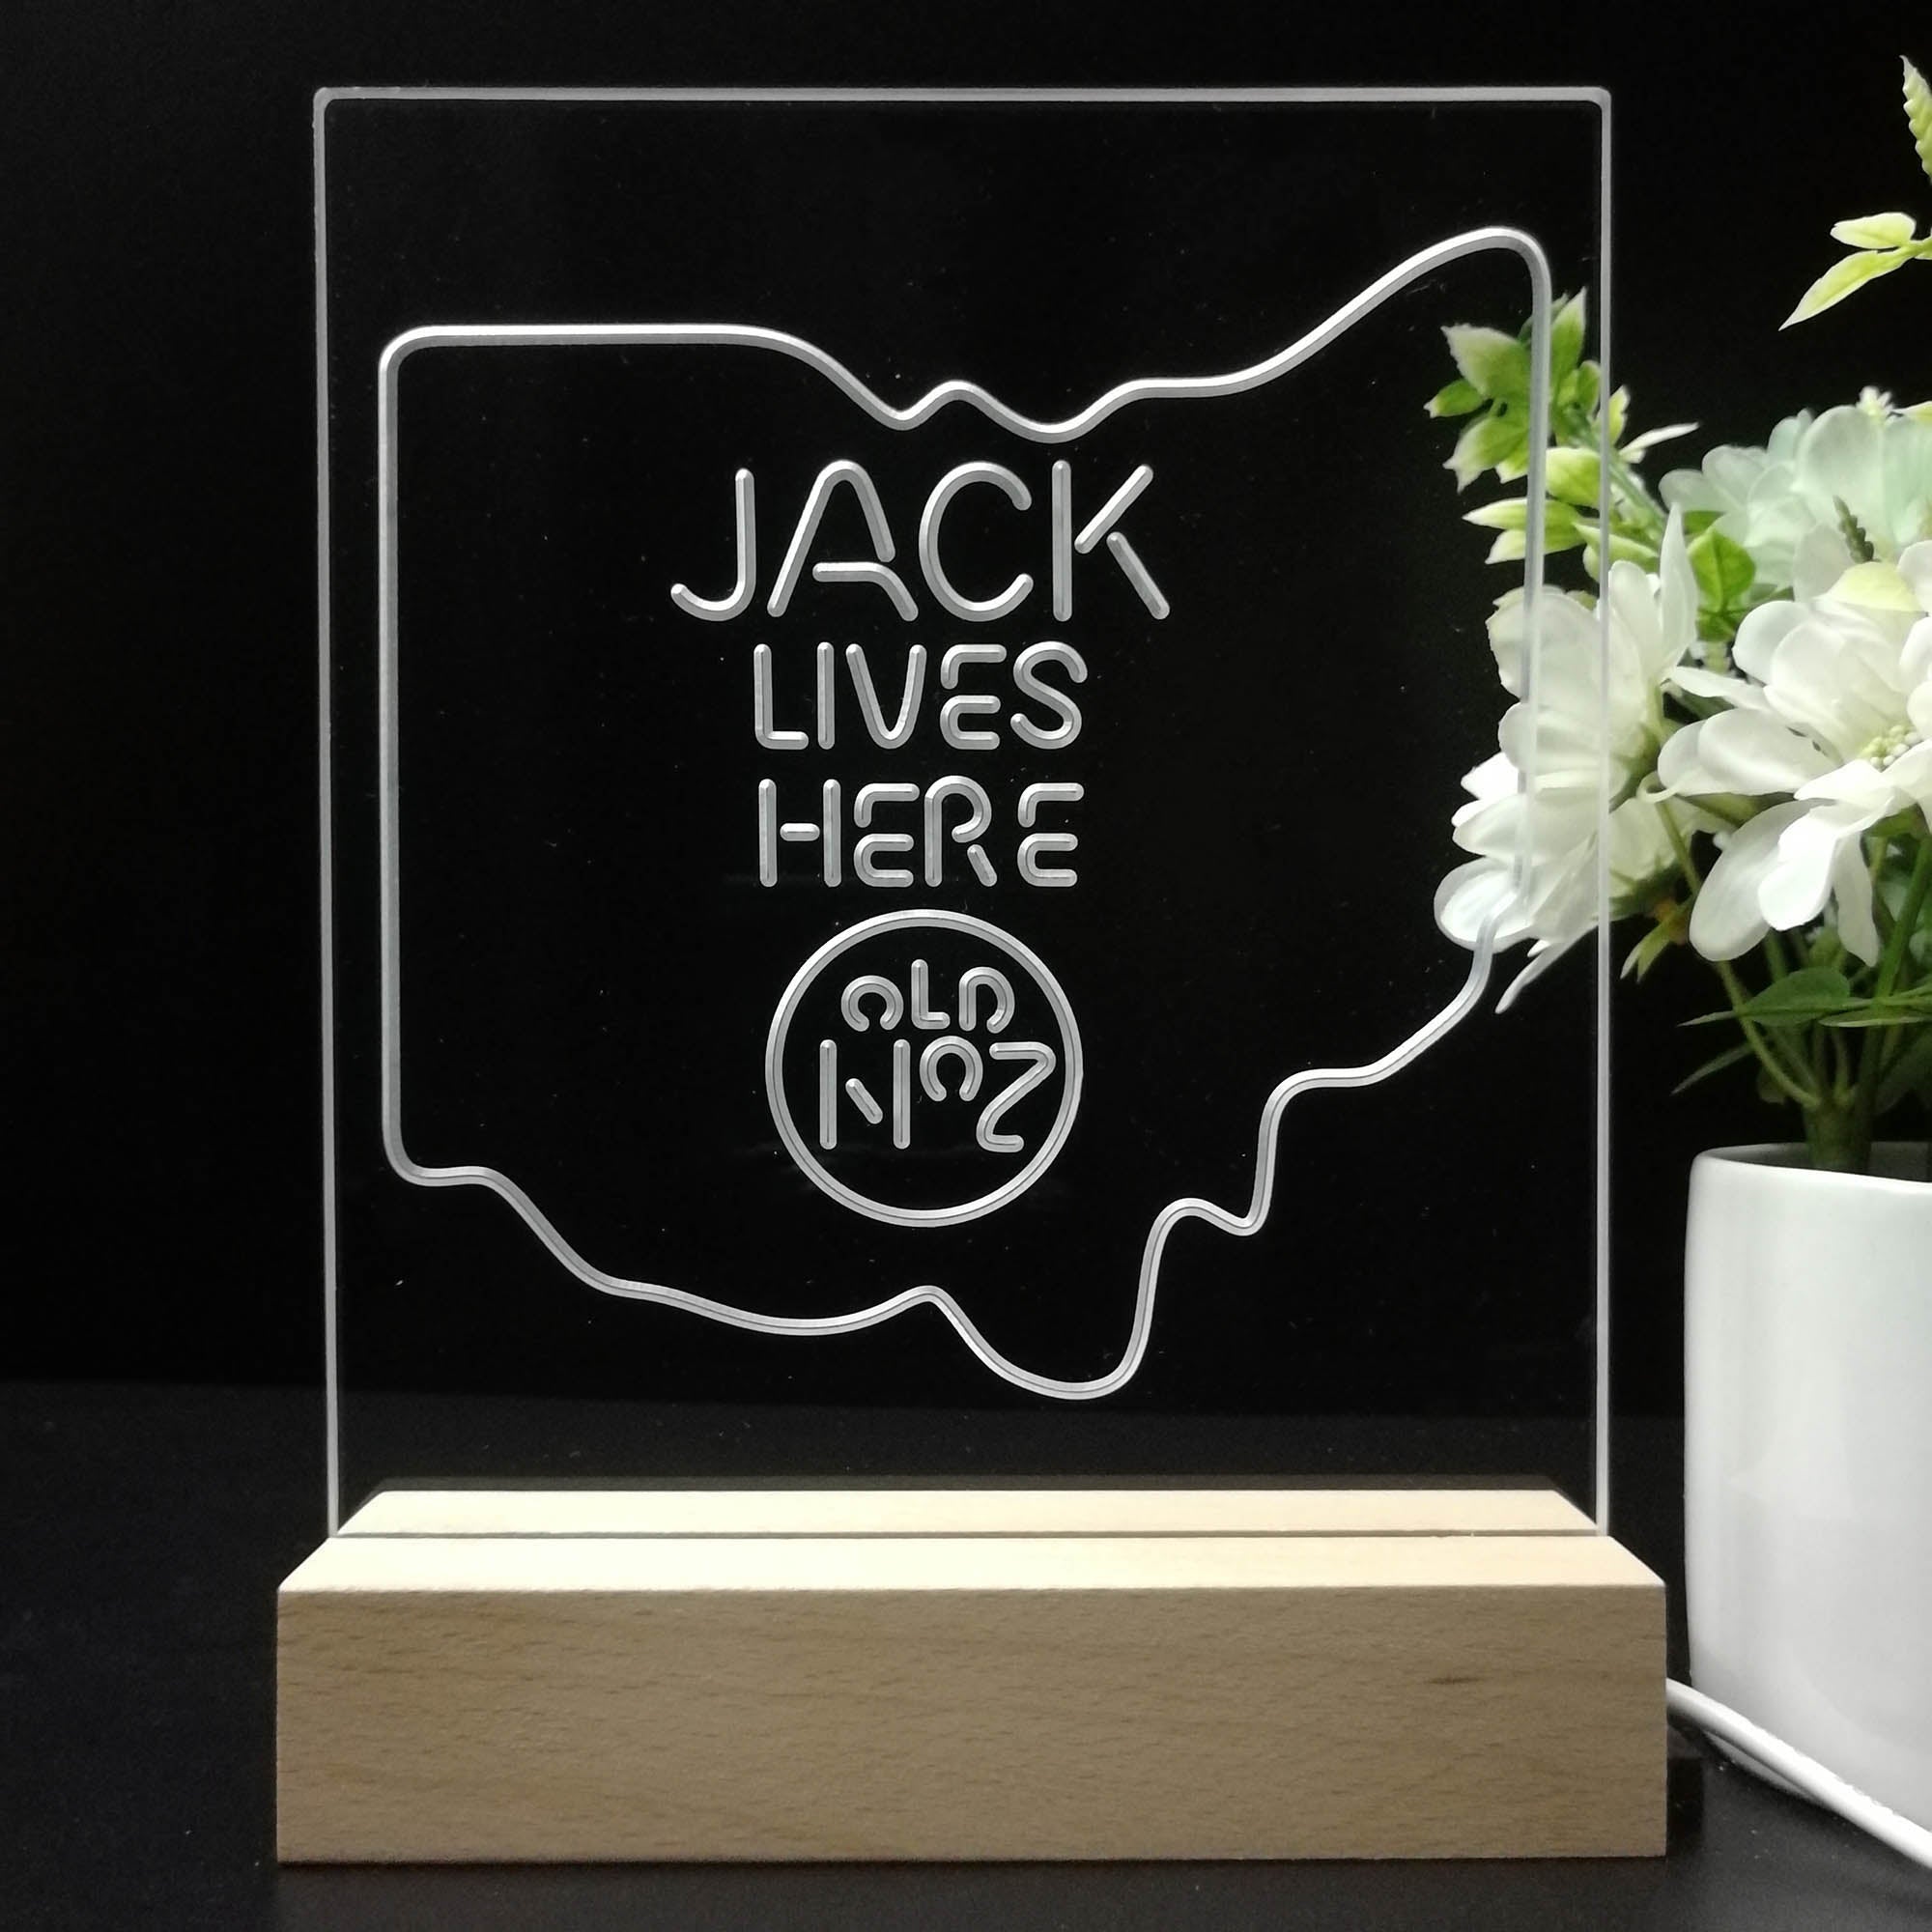 Ohio Jack Lives Here 3D Illusion Night Light Desk Lamp